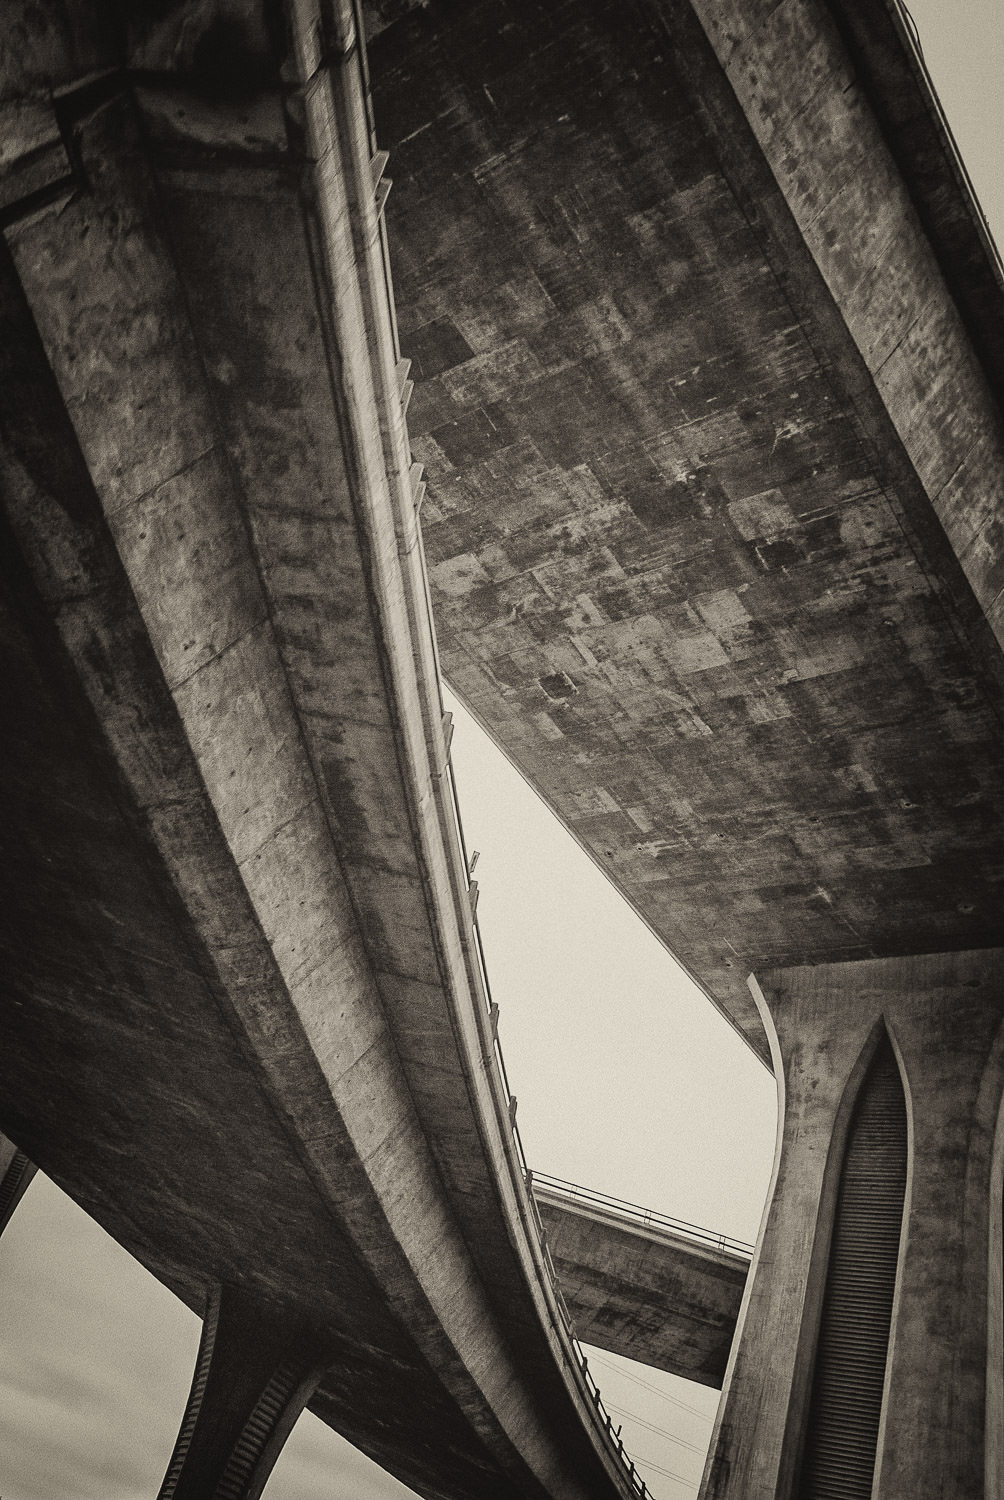 Below Concrete - Freeway, Transport, concrete, road